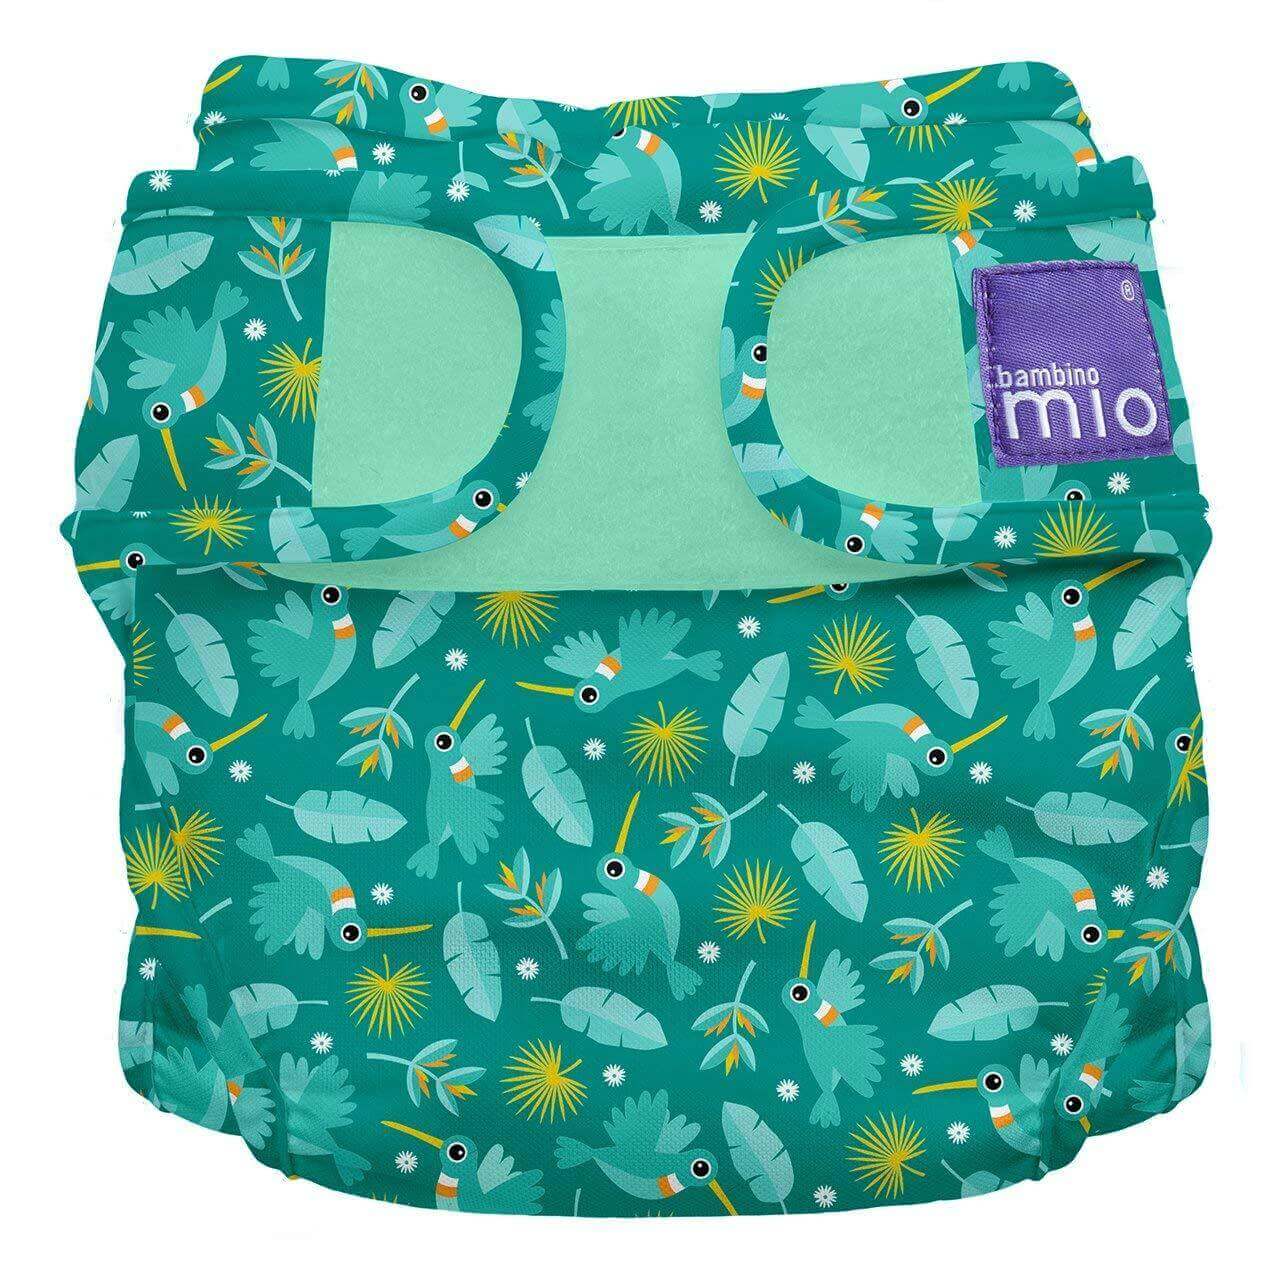 Bambino Mio Mioduo Reusable Nappy Cover Size: Size 1 Colour: Hummingbird reusable nappies nappy covers Earthlets